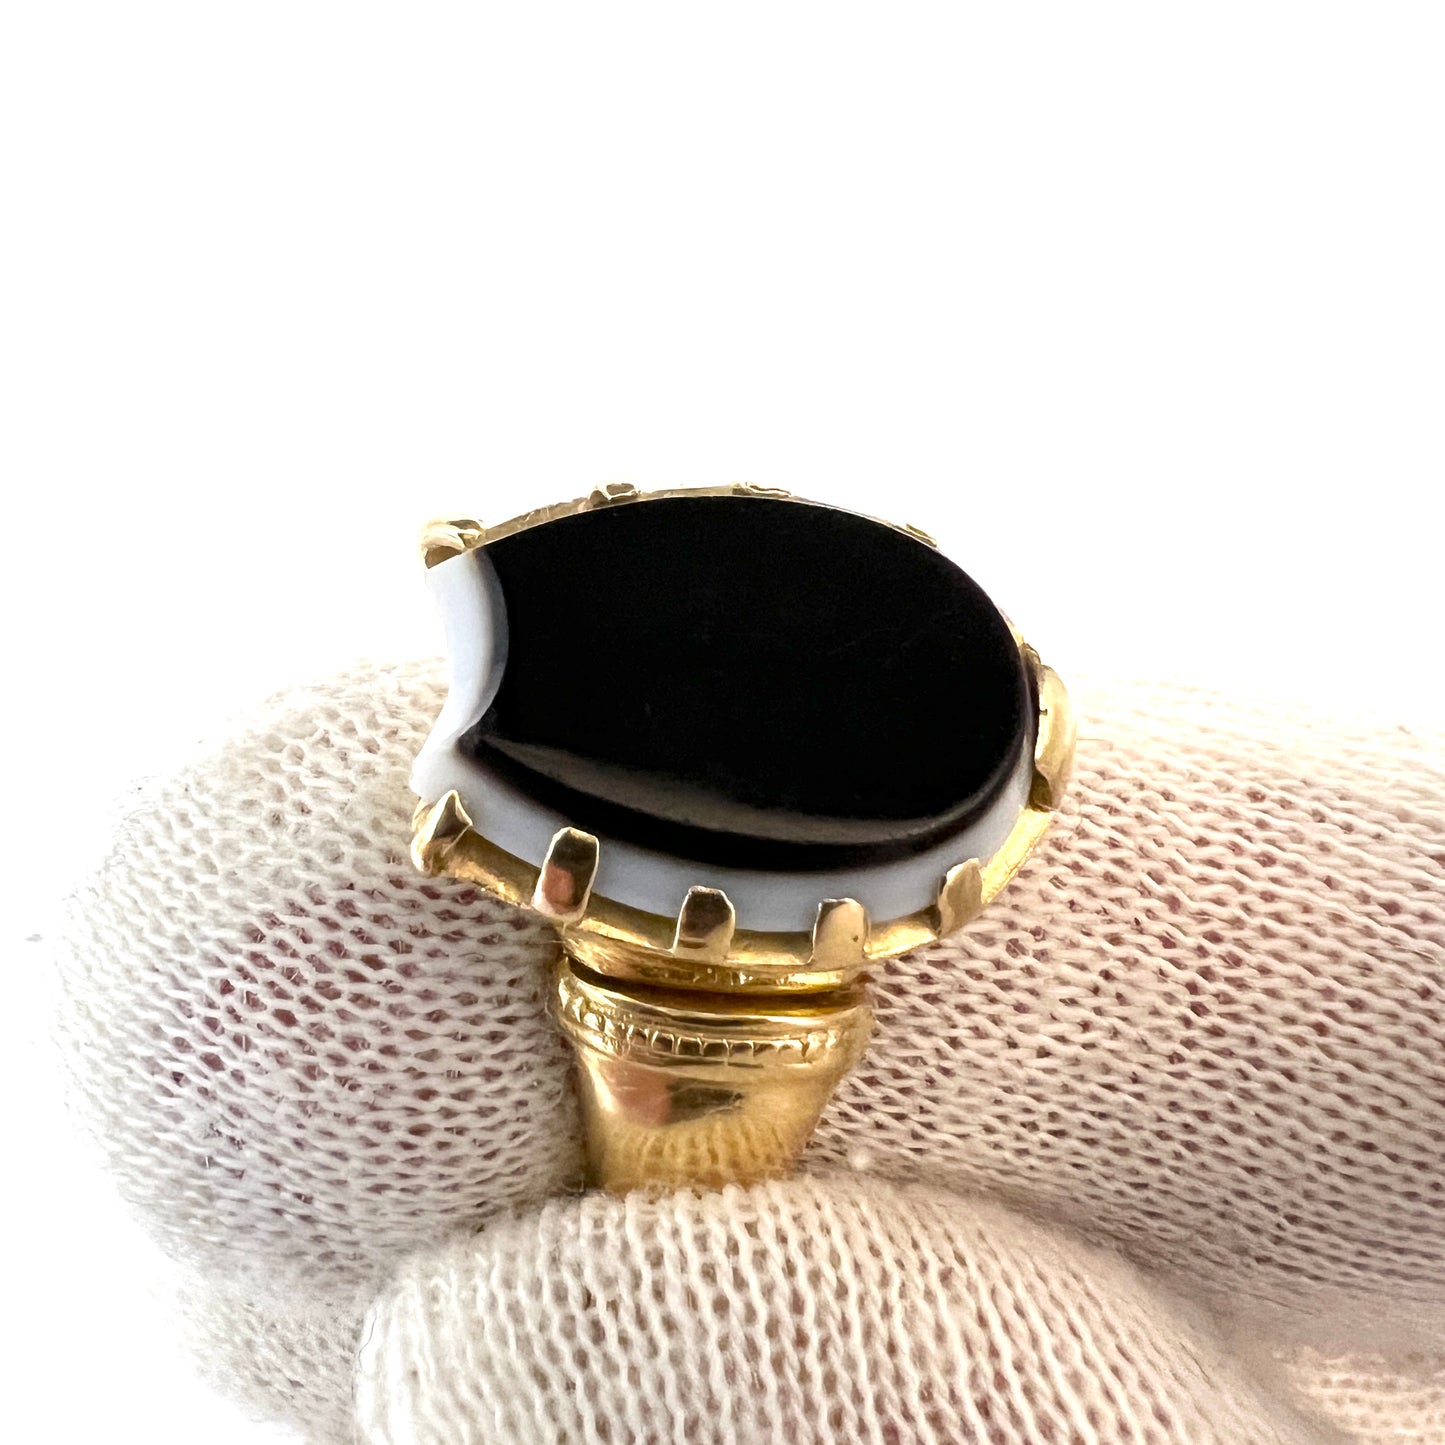 Antique Victorian c 20k Gold Agate Men's Signet Ring.